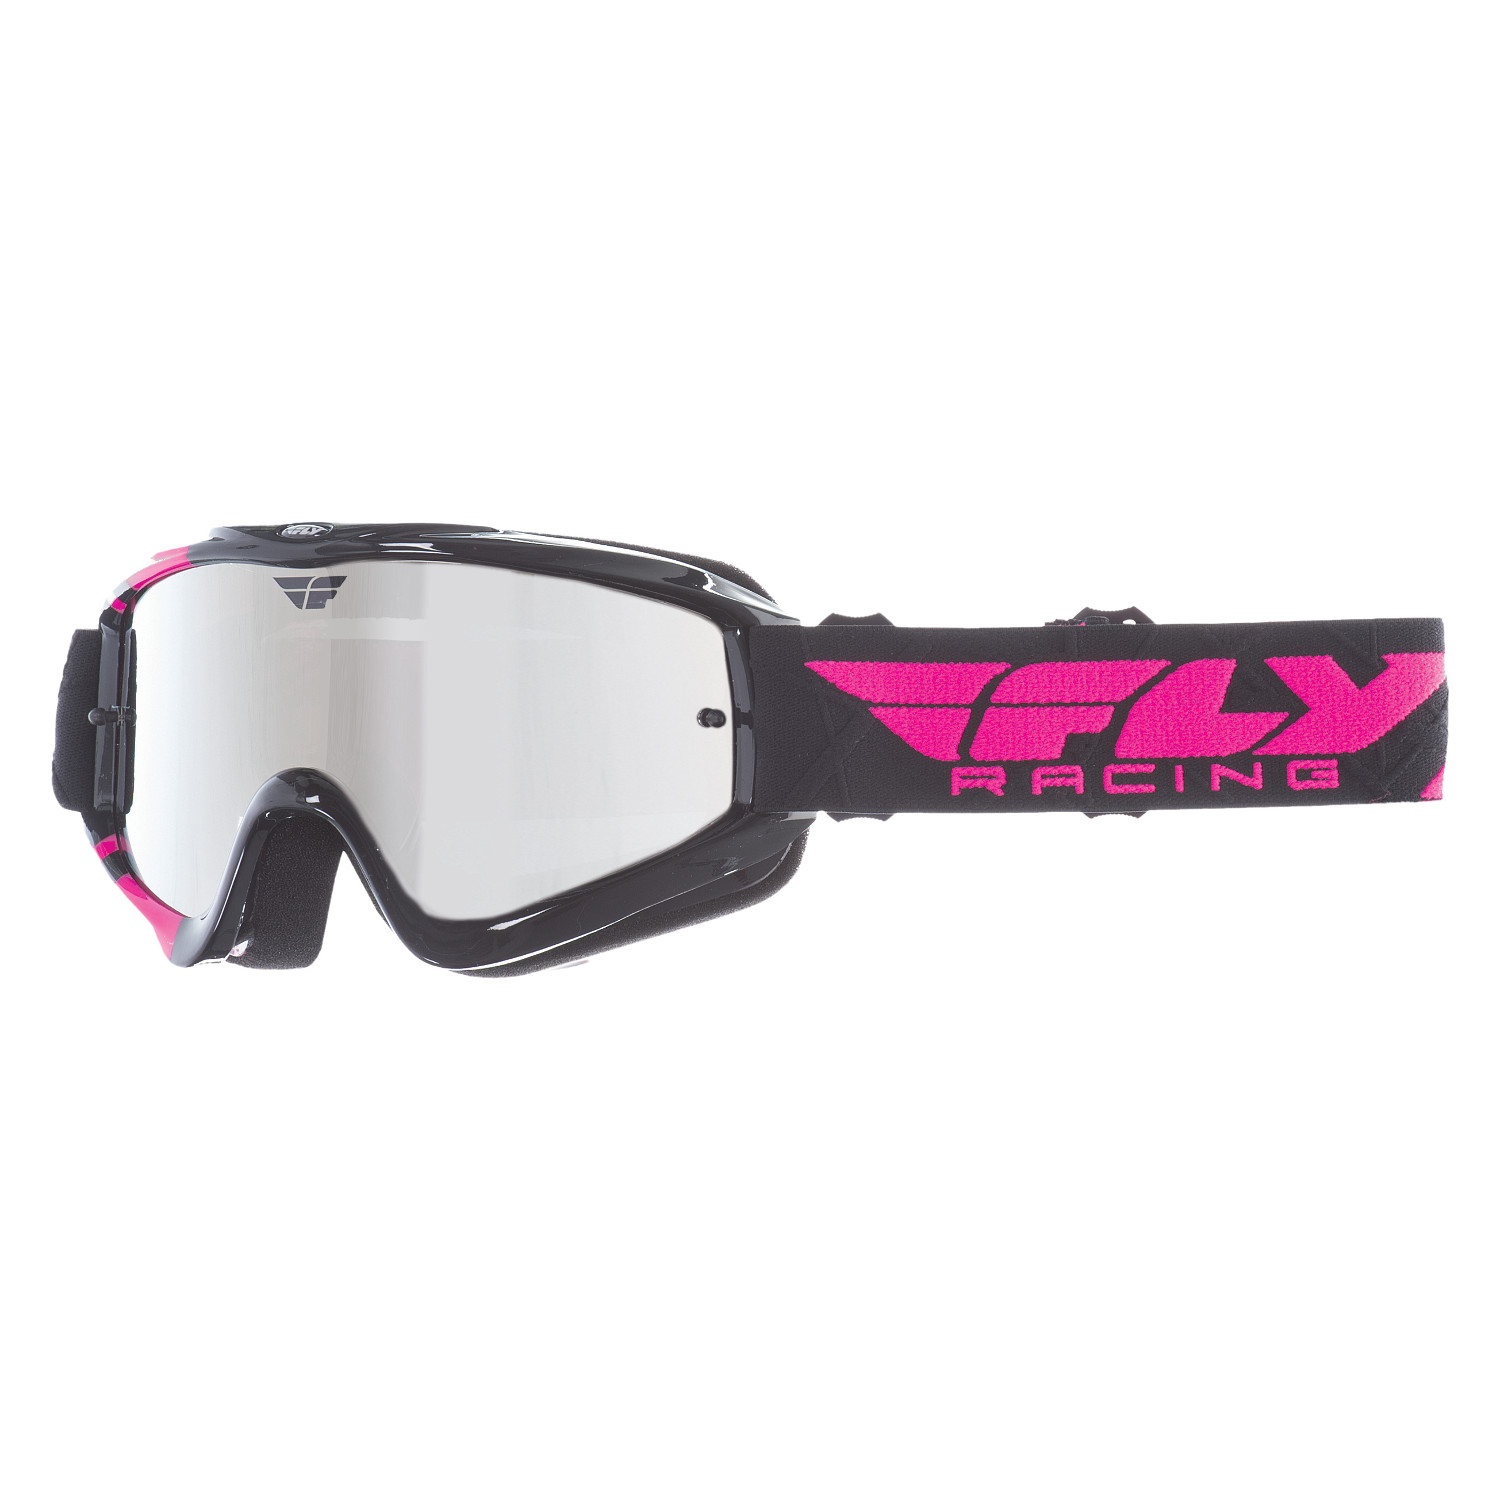 Fly Racing Masque Zone Black/Pink Anti-Fog